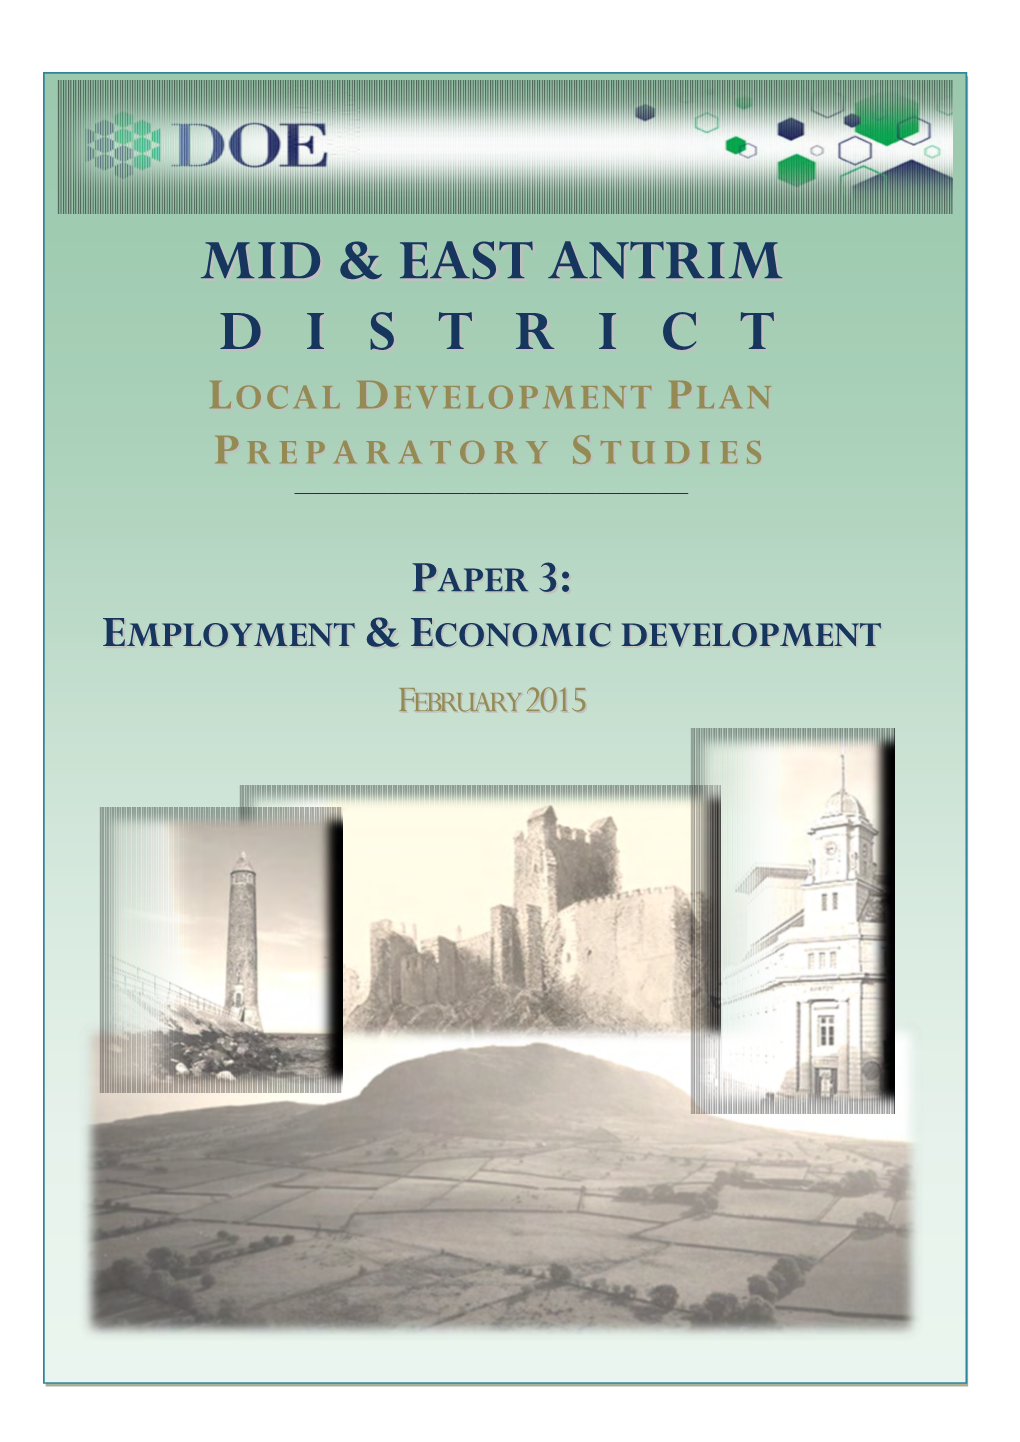 Paper 3: Employment and Economic Development